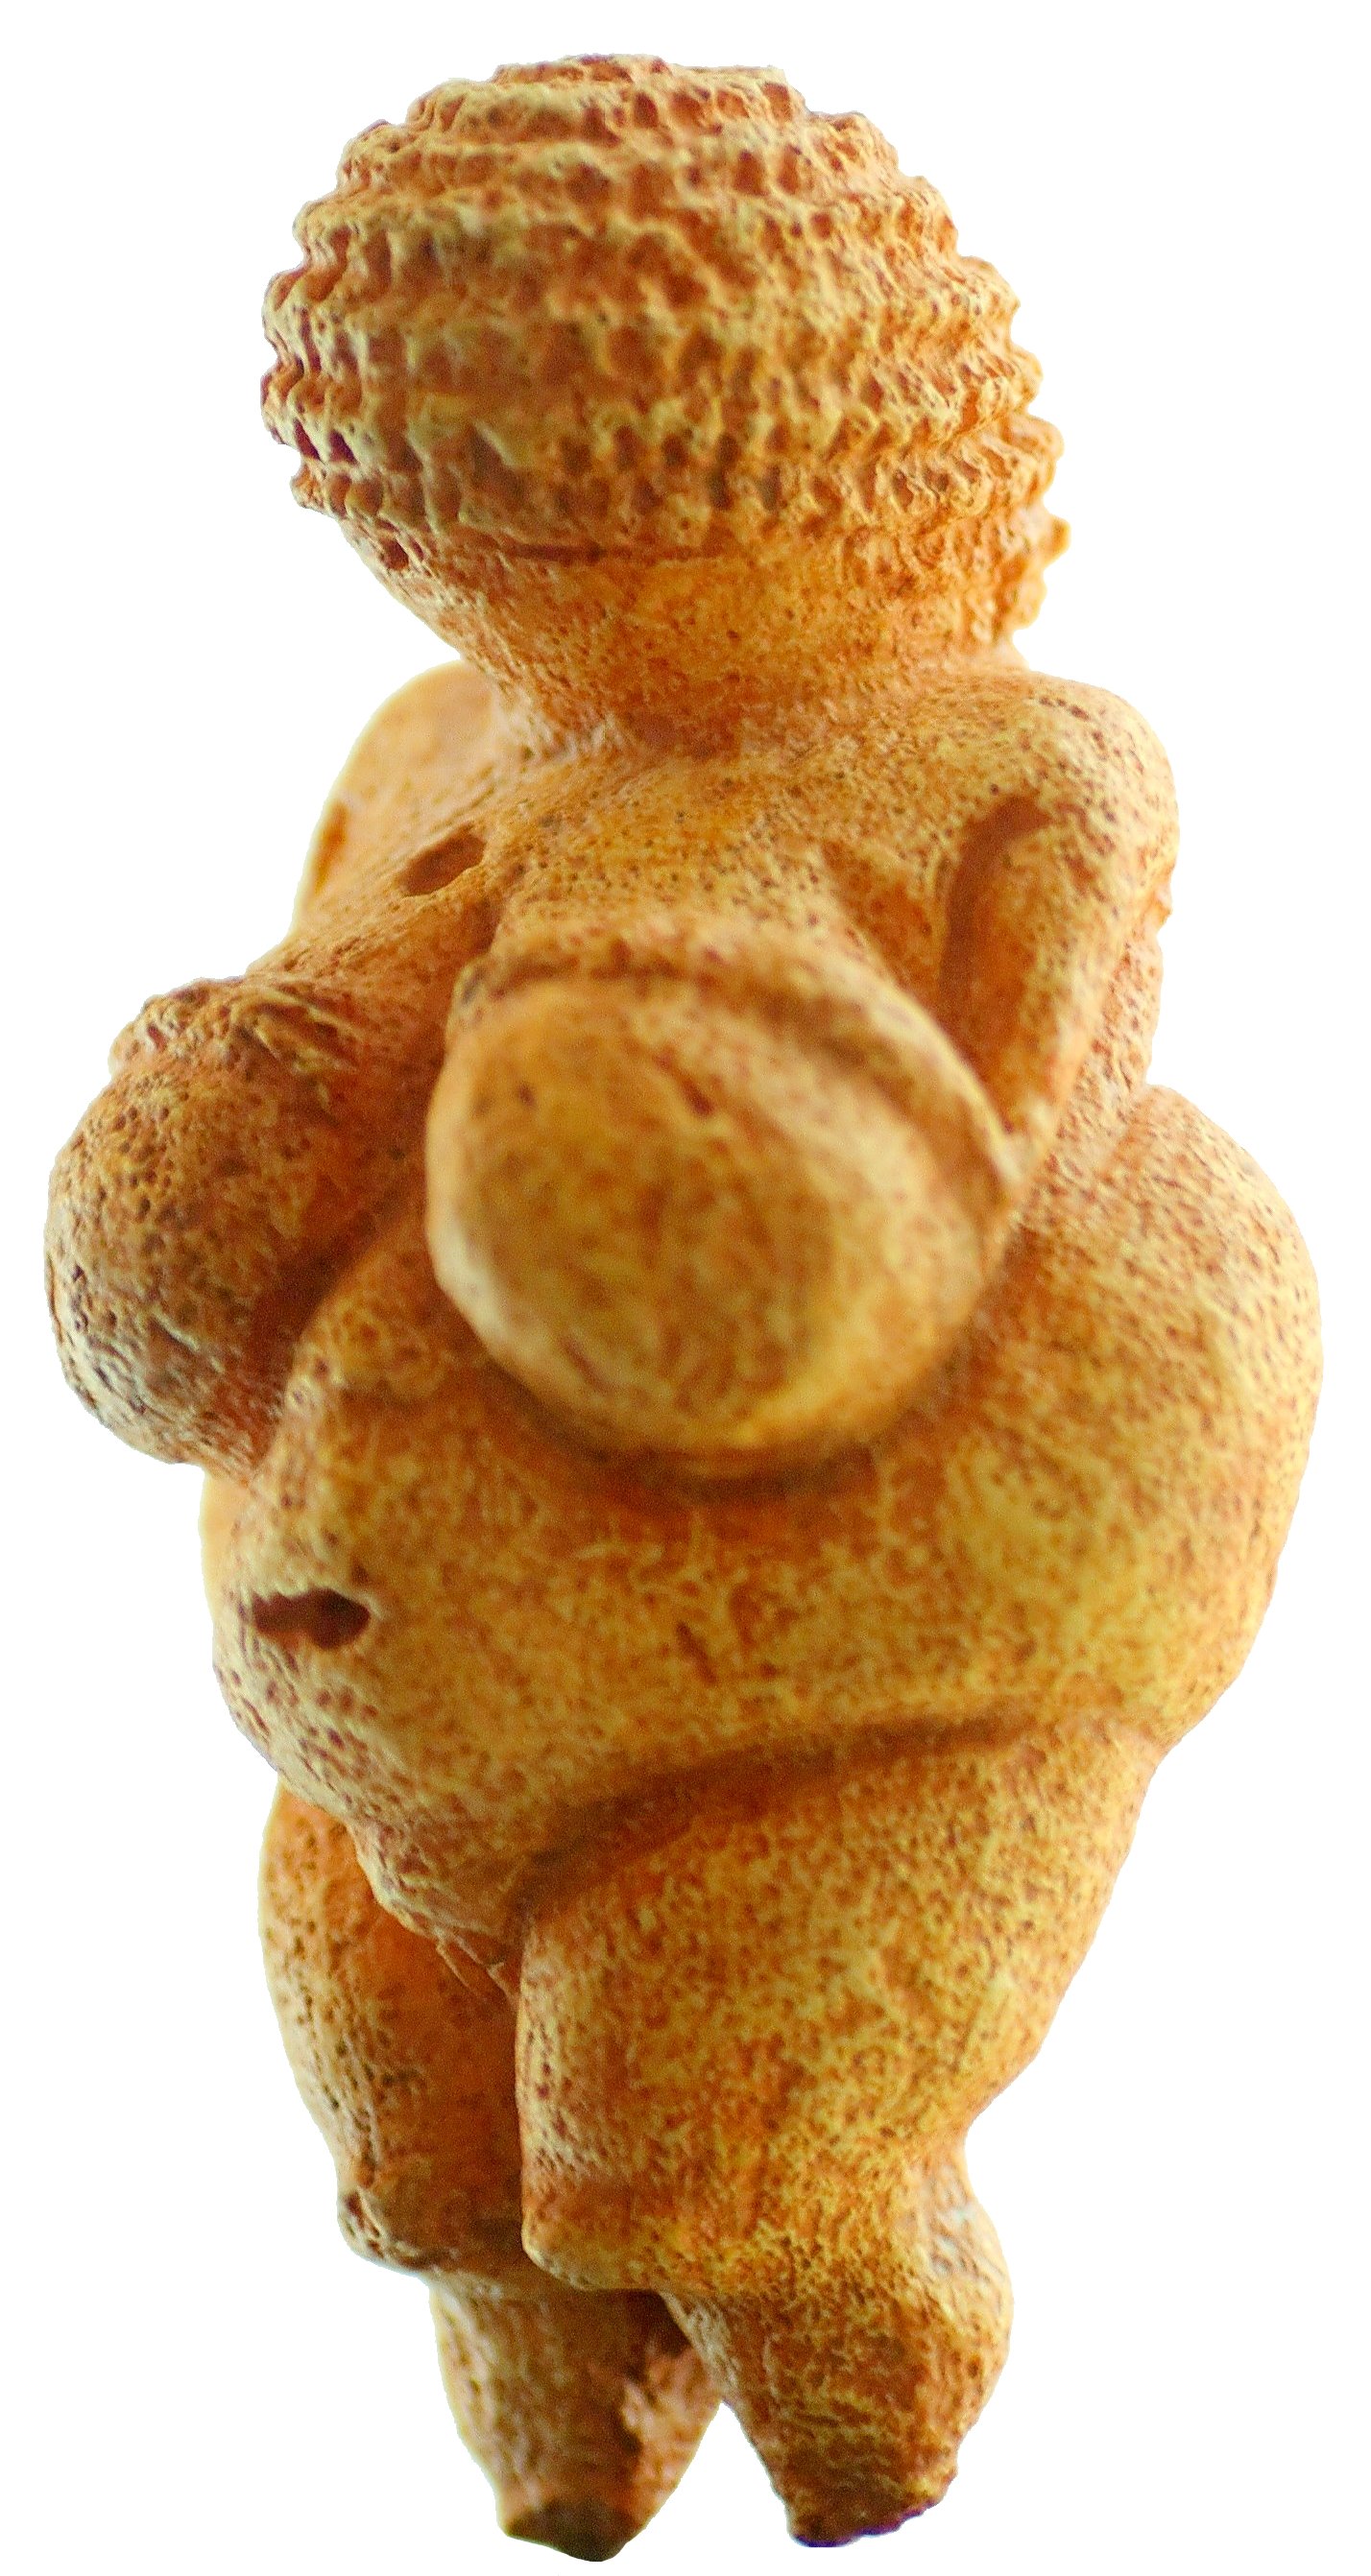 http://upload.wikimedia.org/wikipedia/commons/5/50/Venus_von_Willendorf_01.jpg